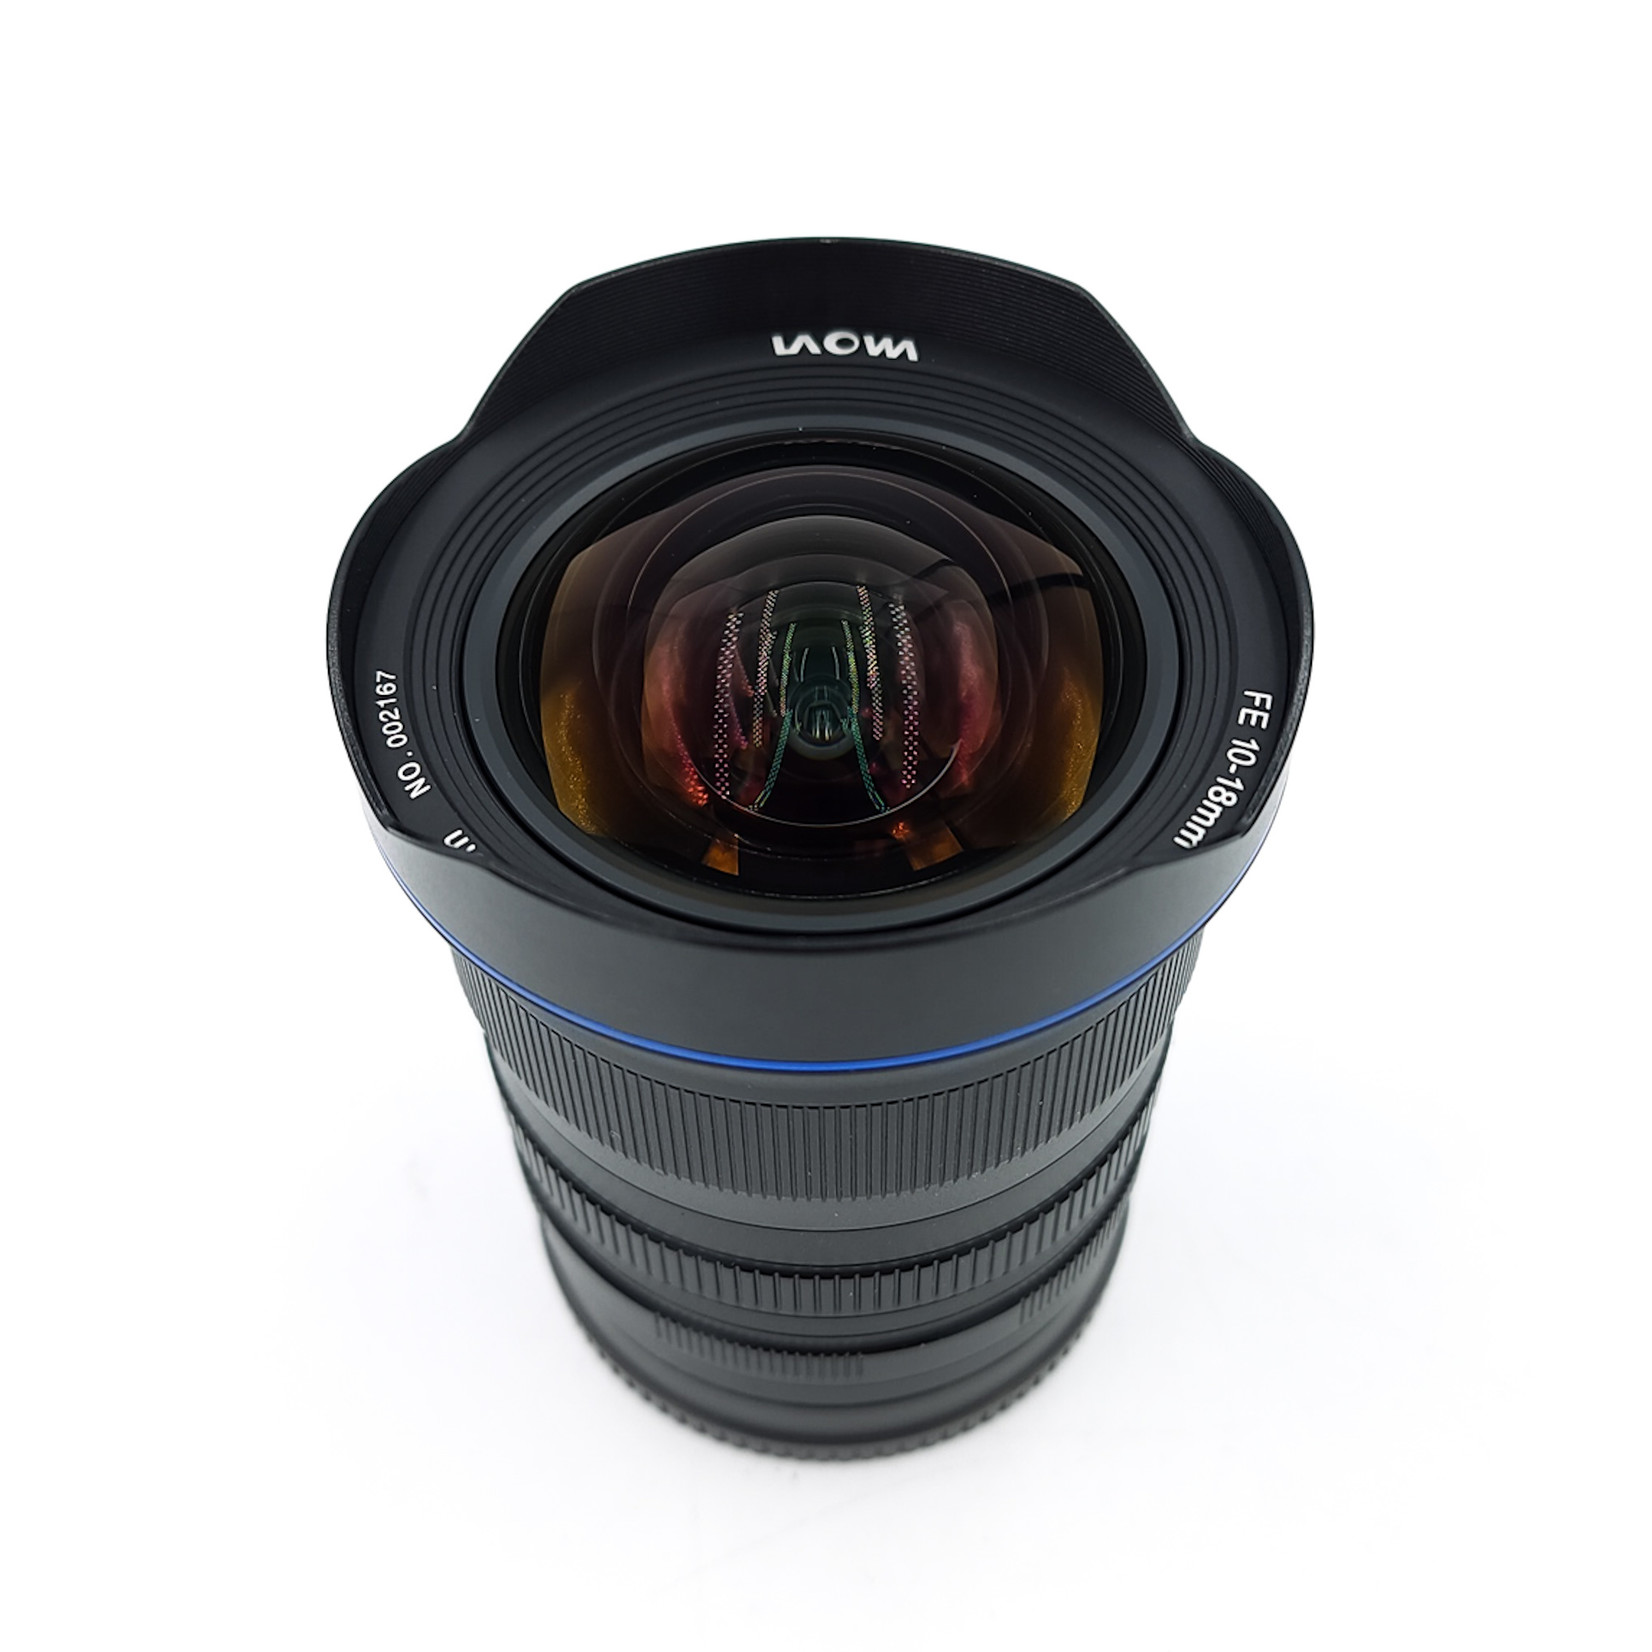 Laowa Used Laowa 10-18mm f4.5-5.6 Wide Angle Zoom Lens for Sony E